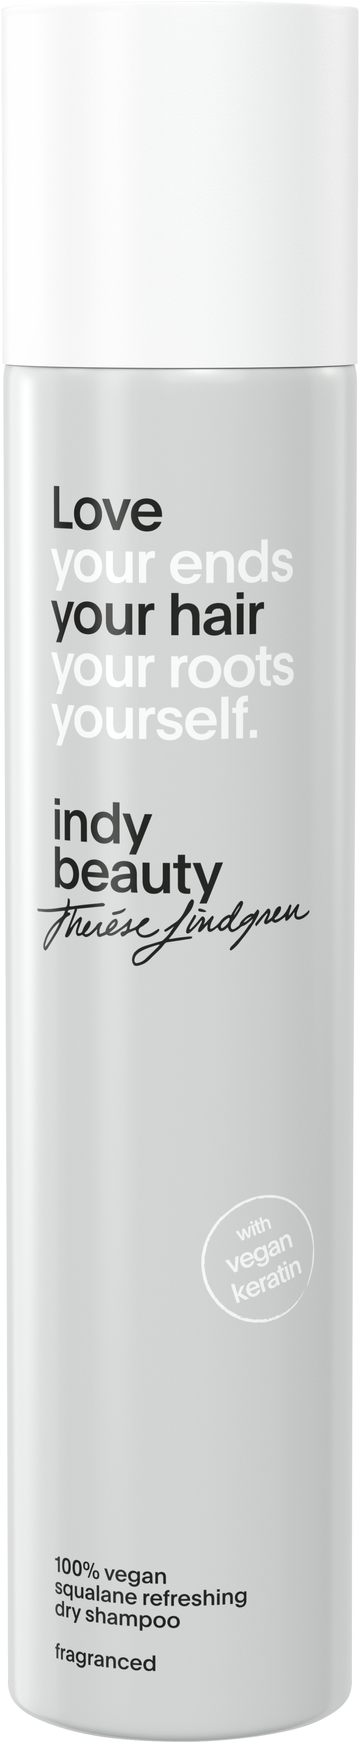 Indy Beauty Refreshing squalane dry shampoo 